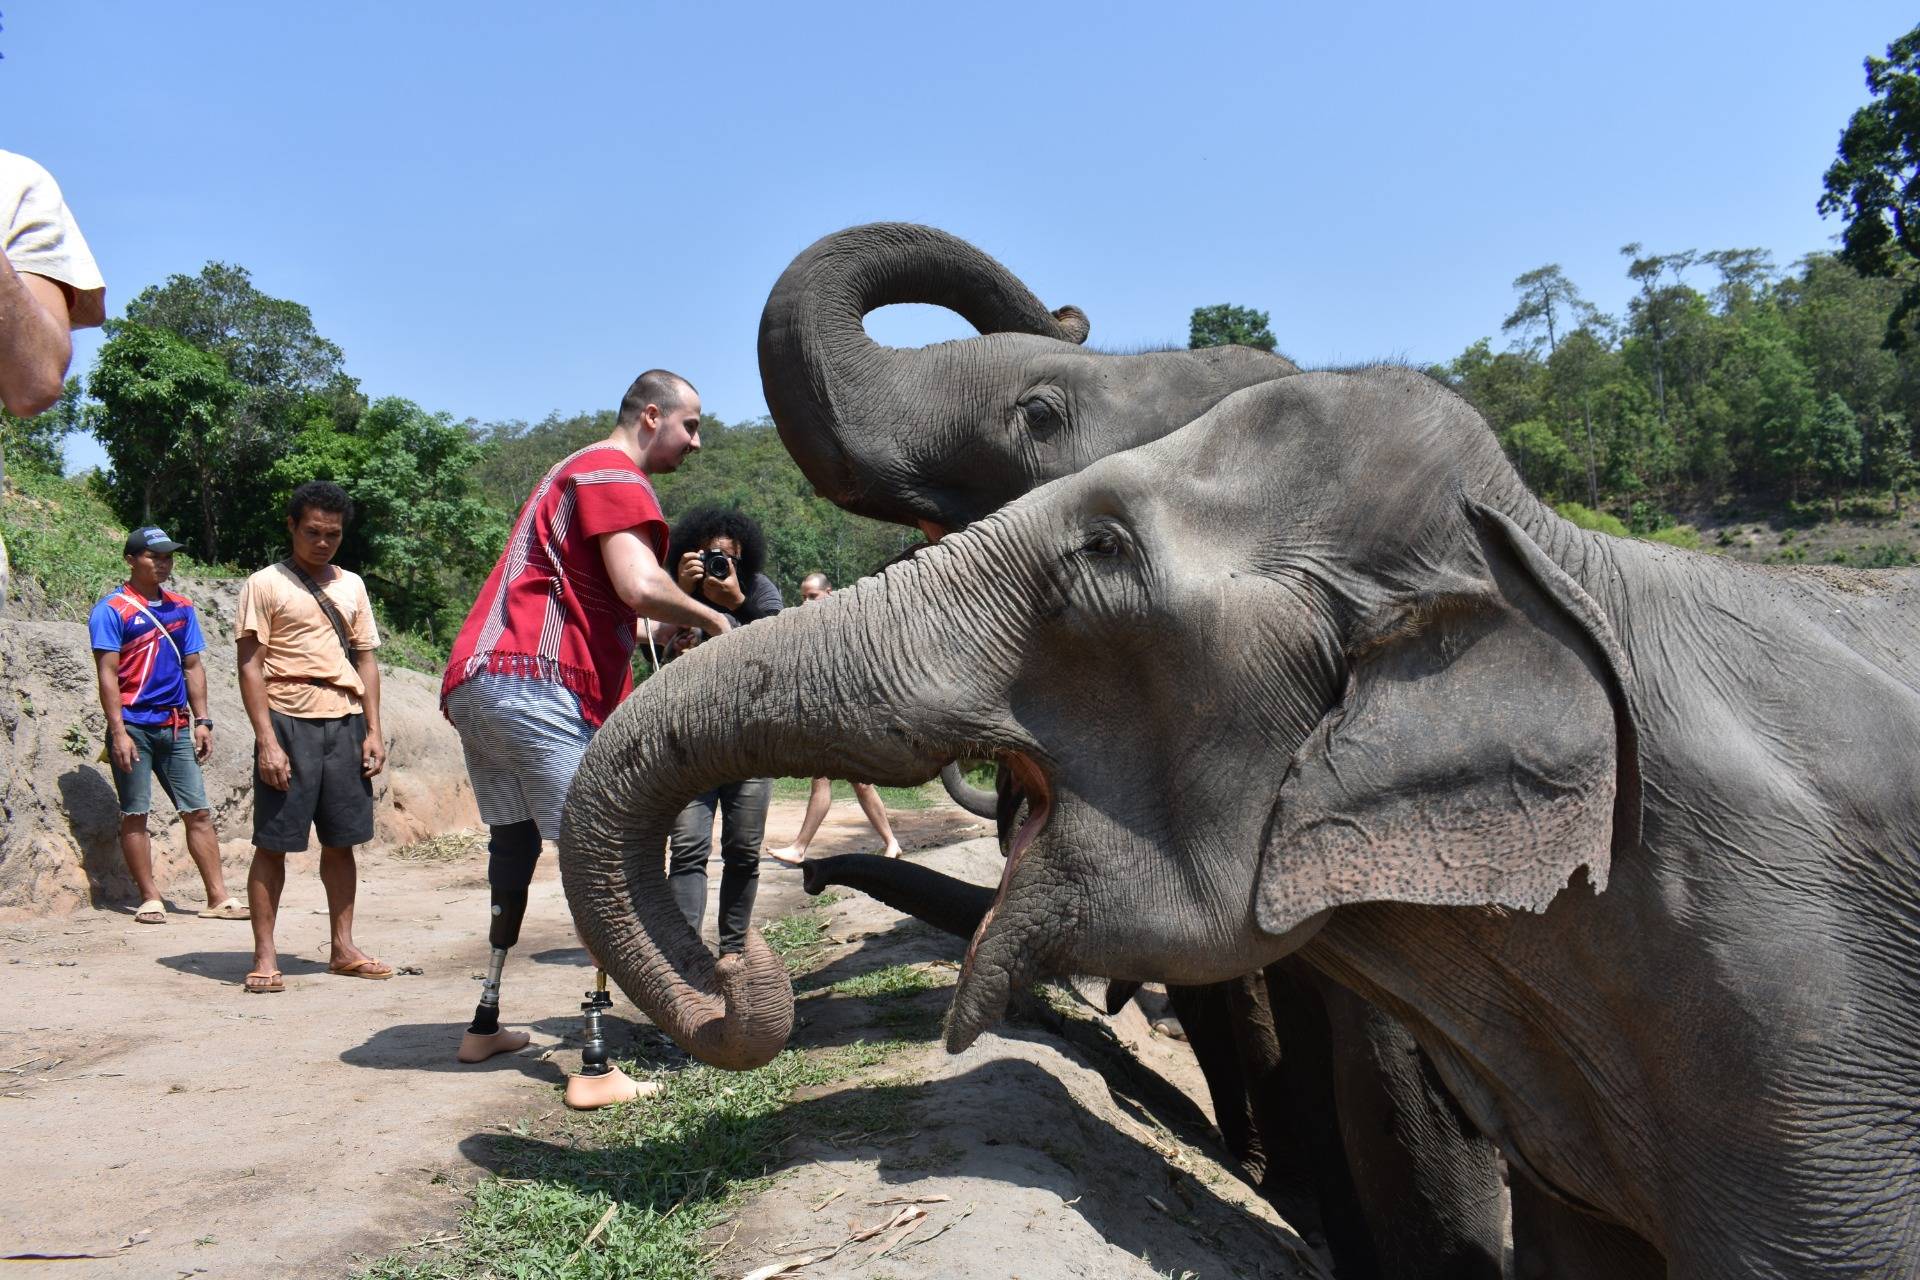 Feeding elephants with bananas